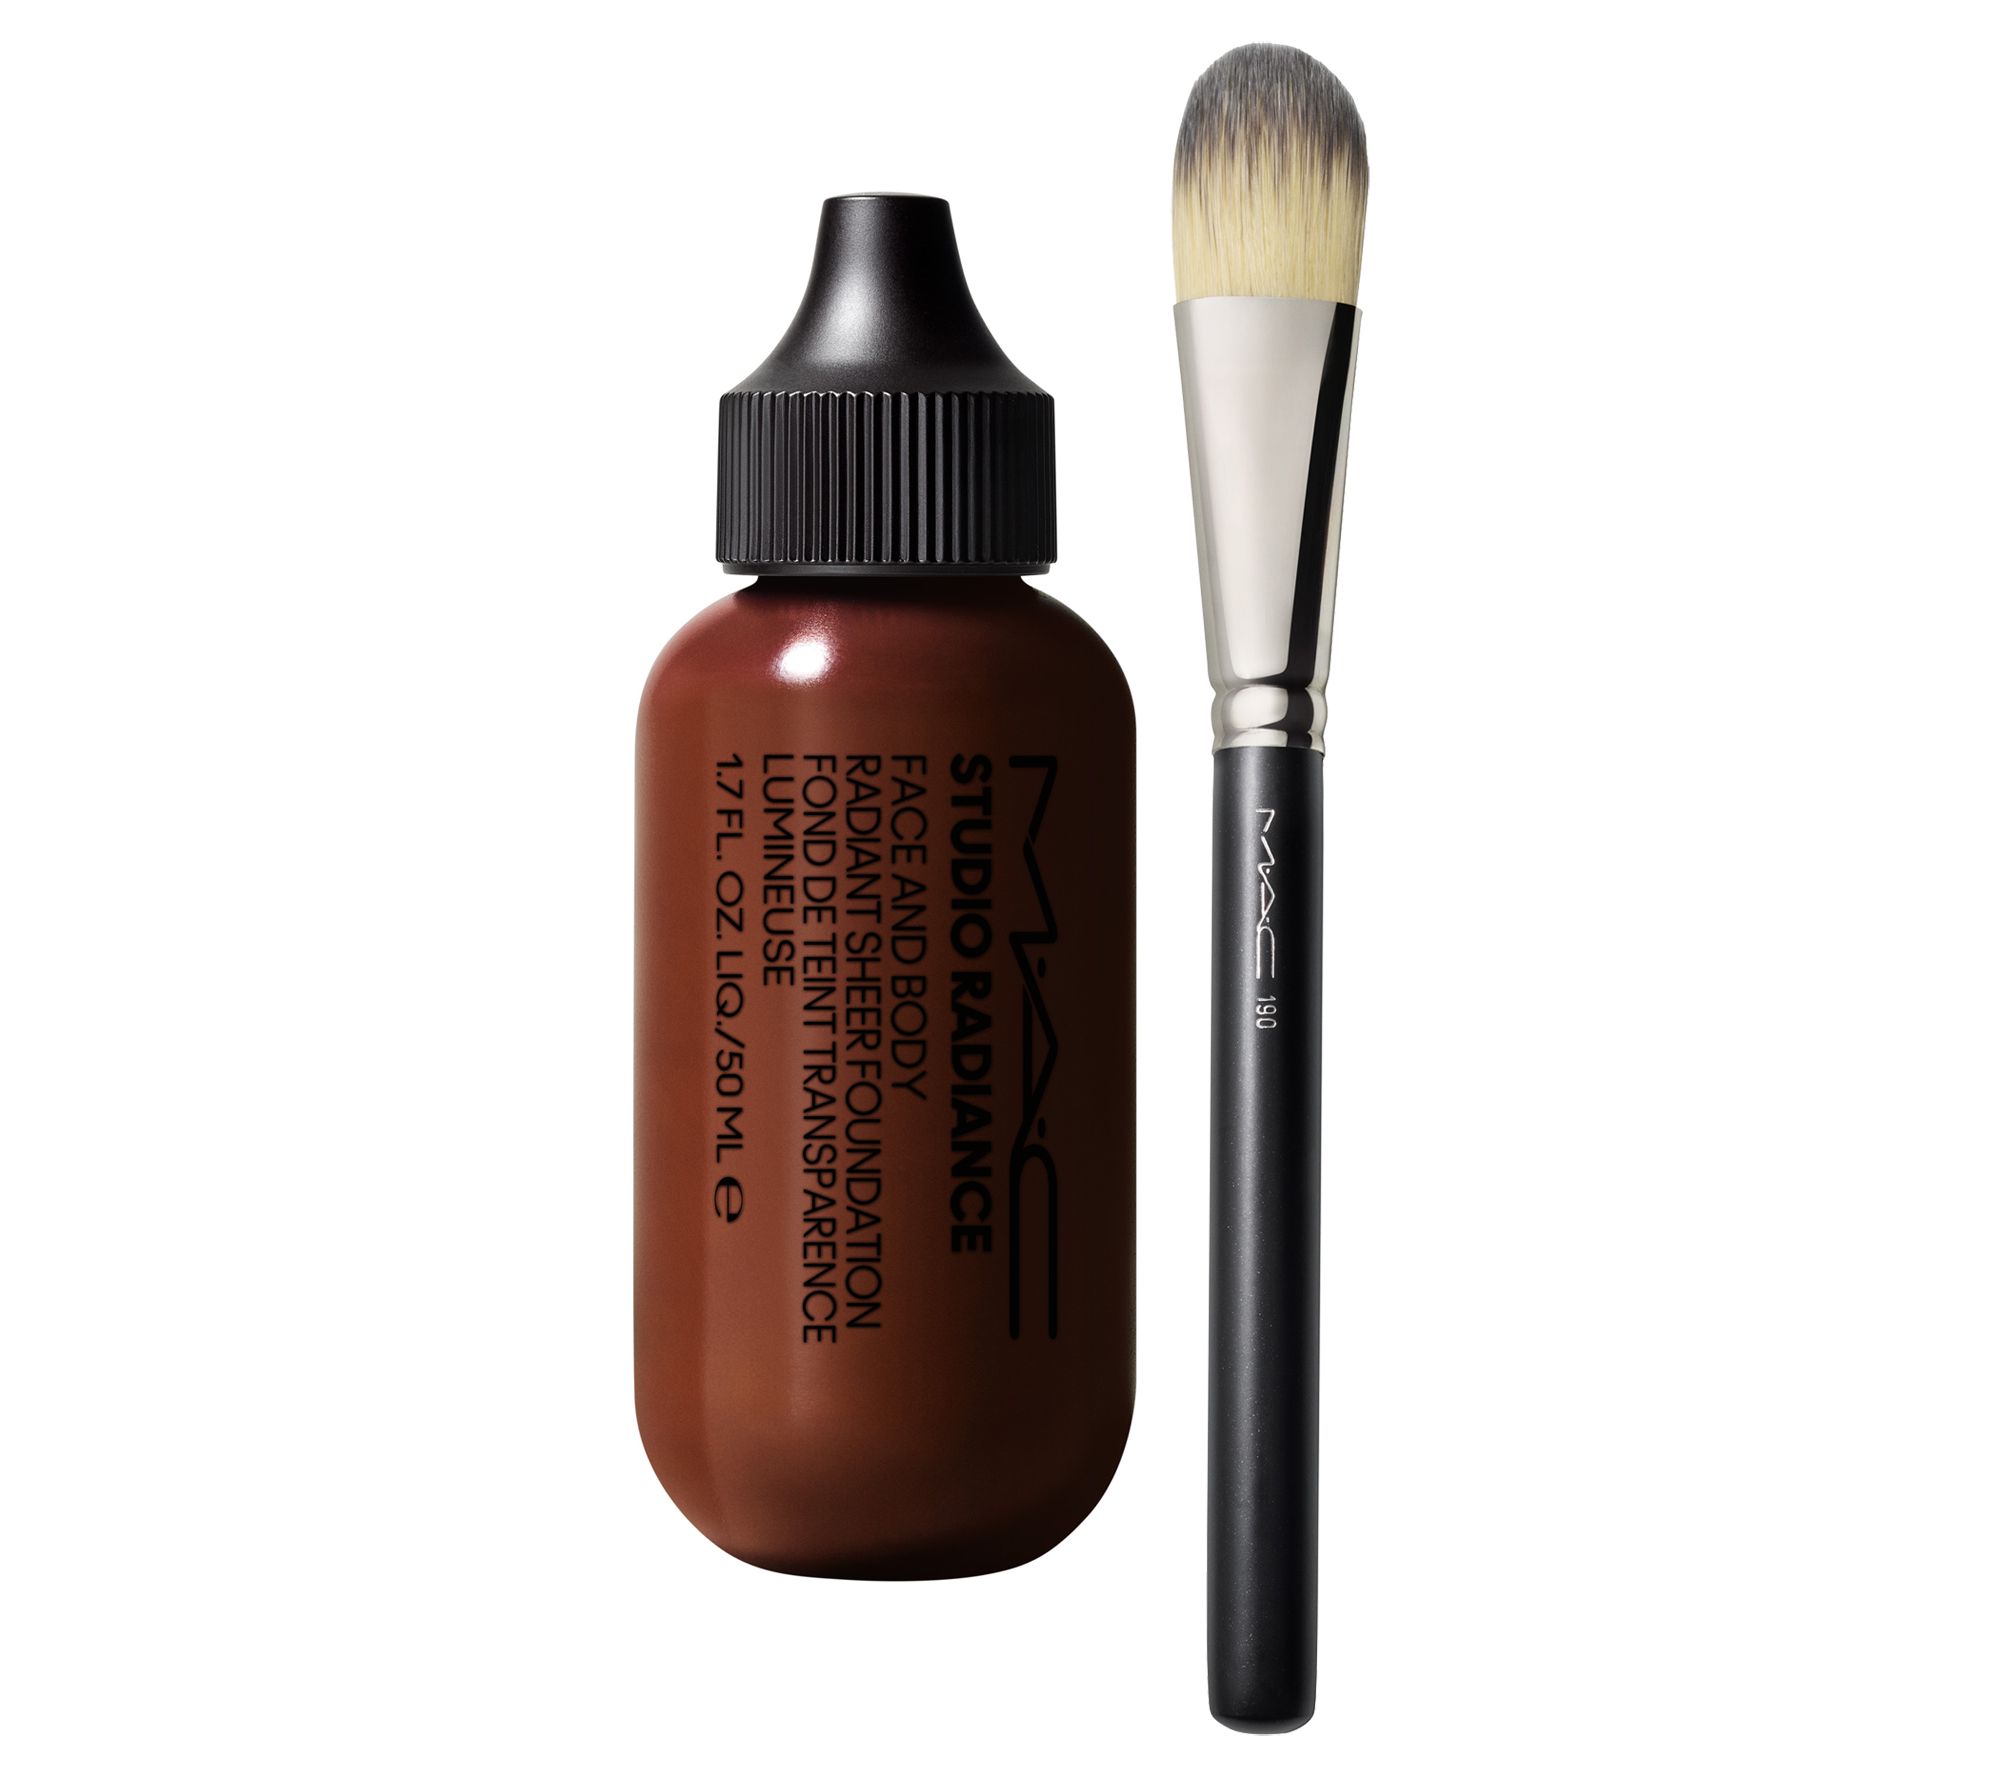 Cosmetics Studio Radiance Face & Body with Brush - QVC.com